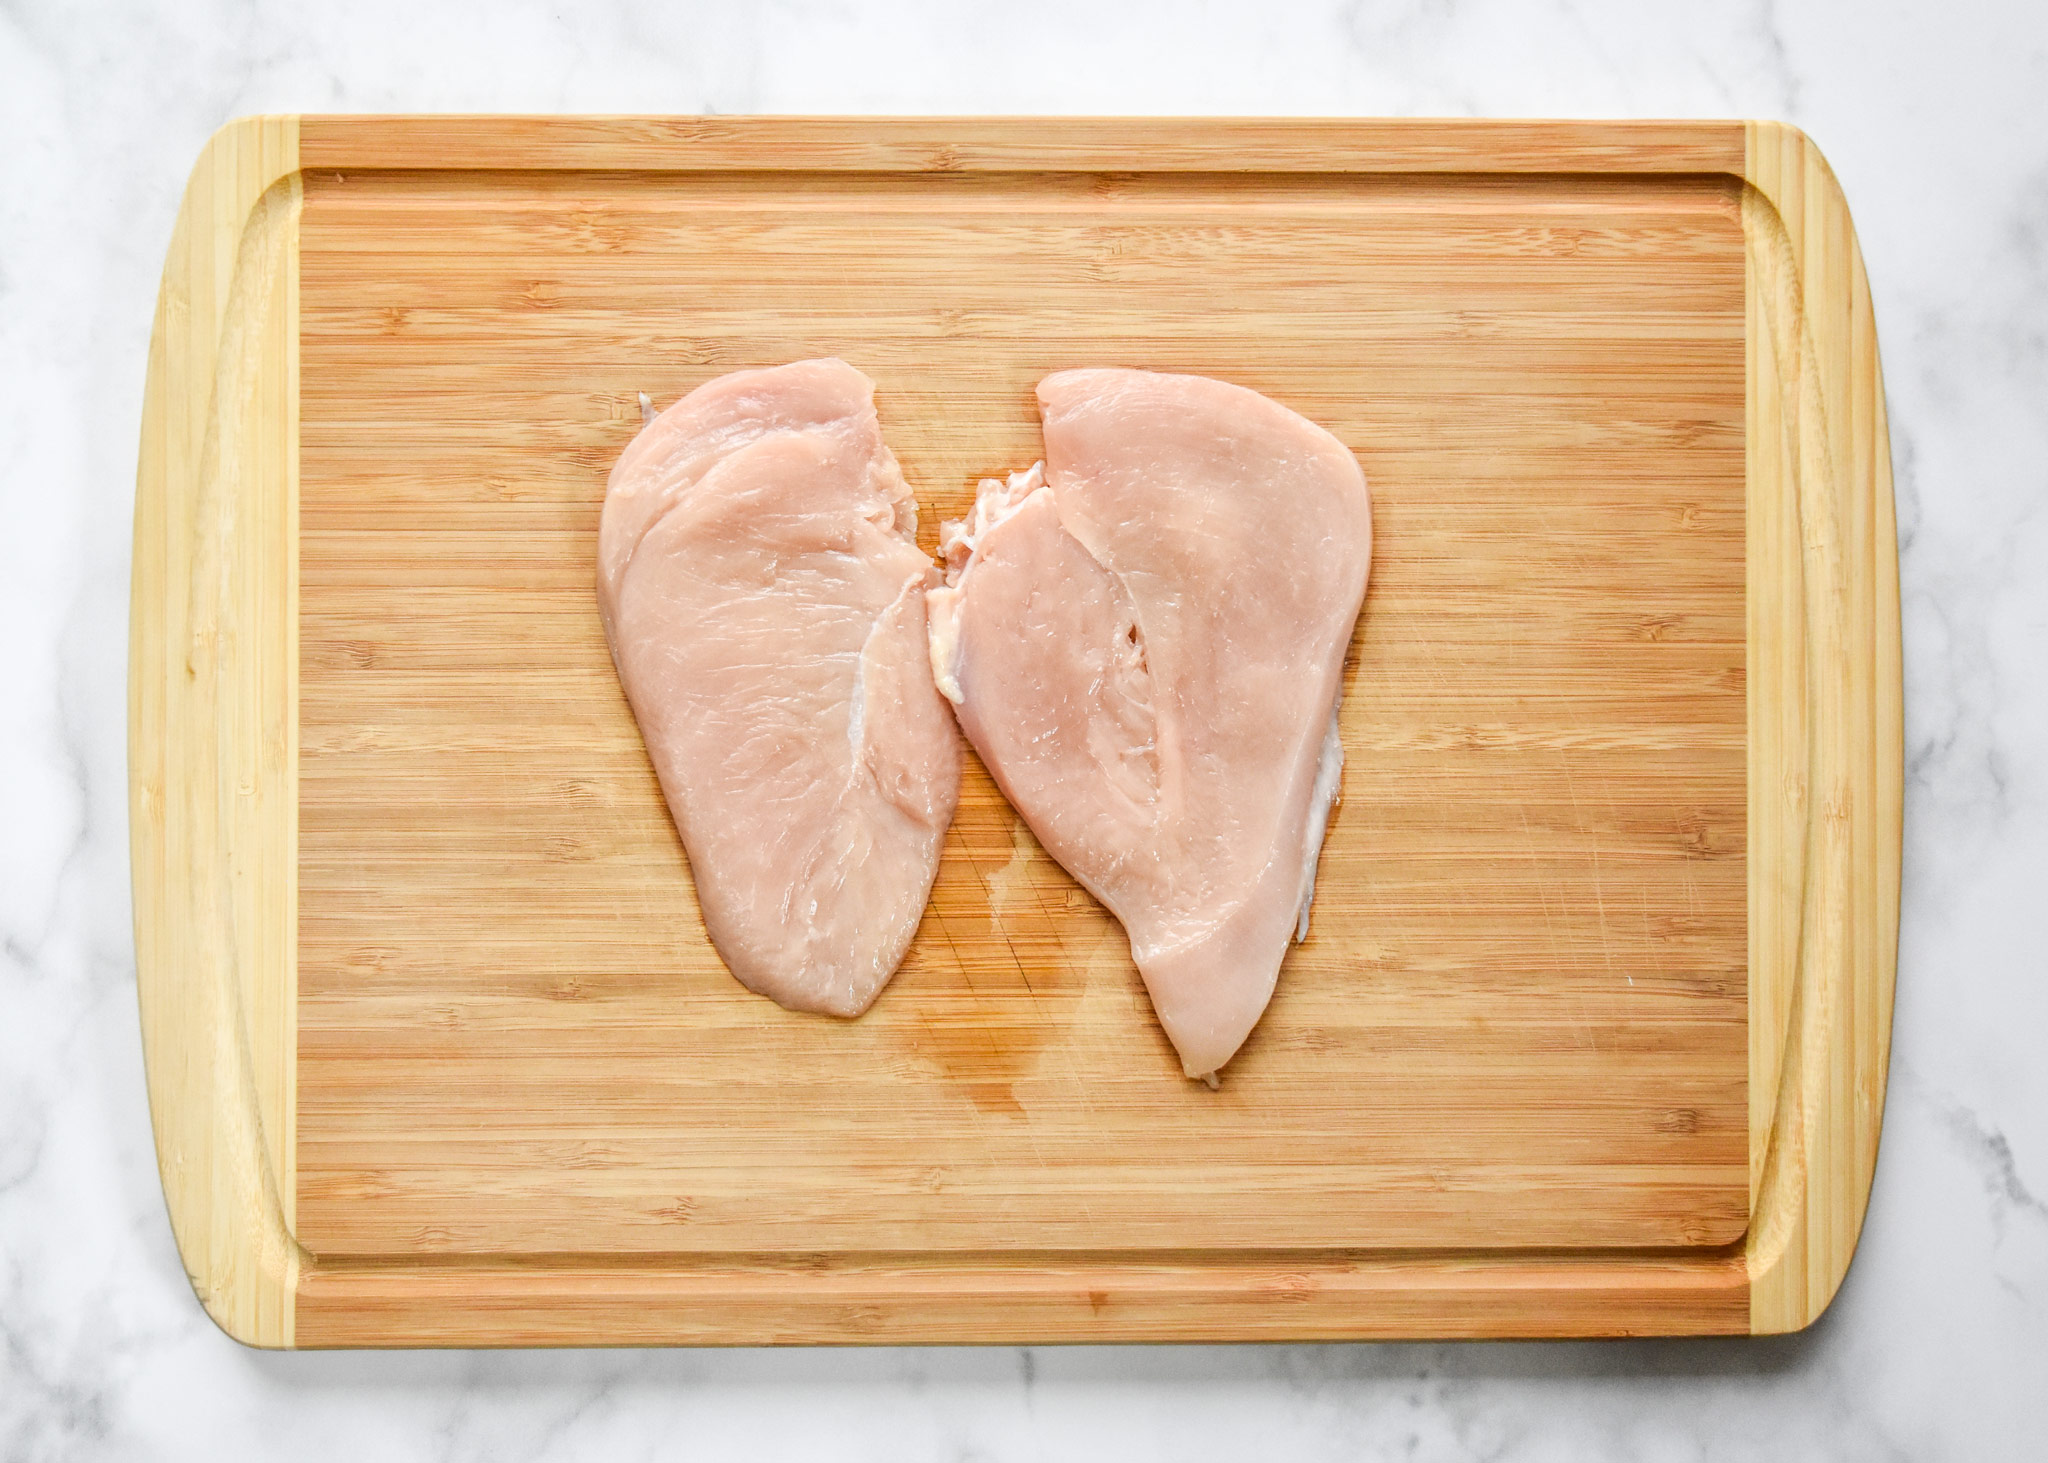 tenderized chicken breast on a cutting board.